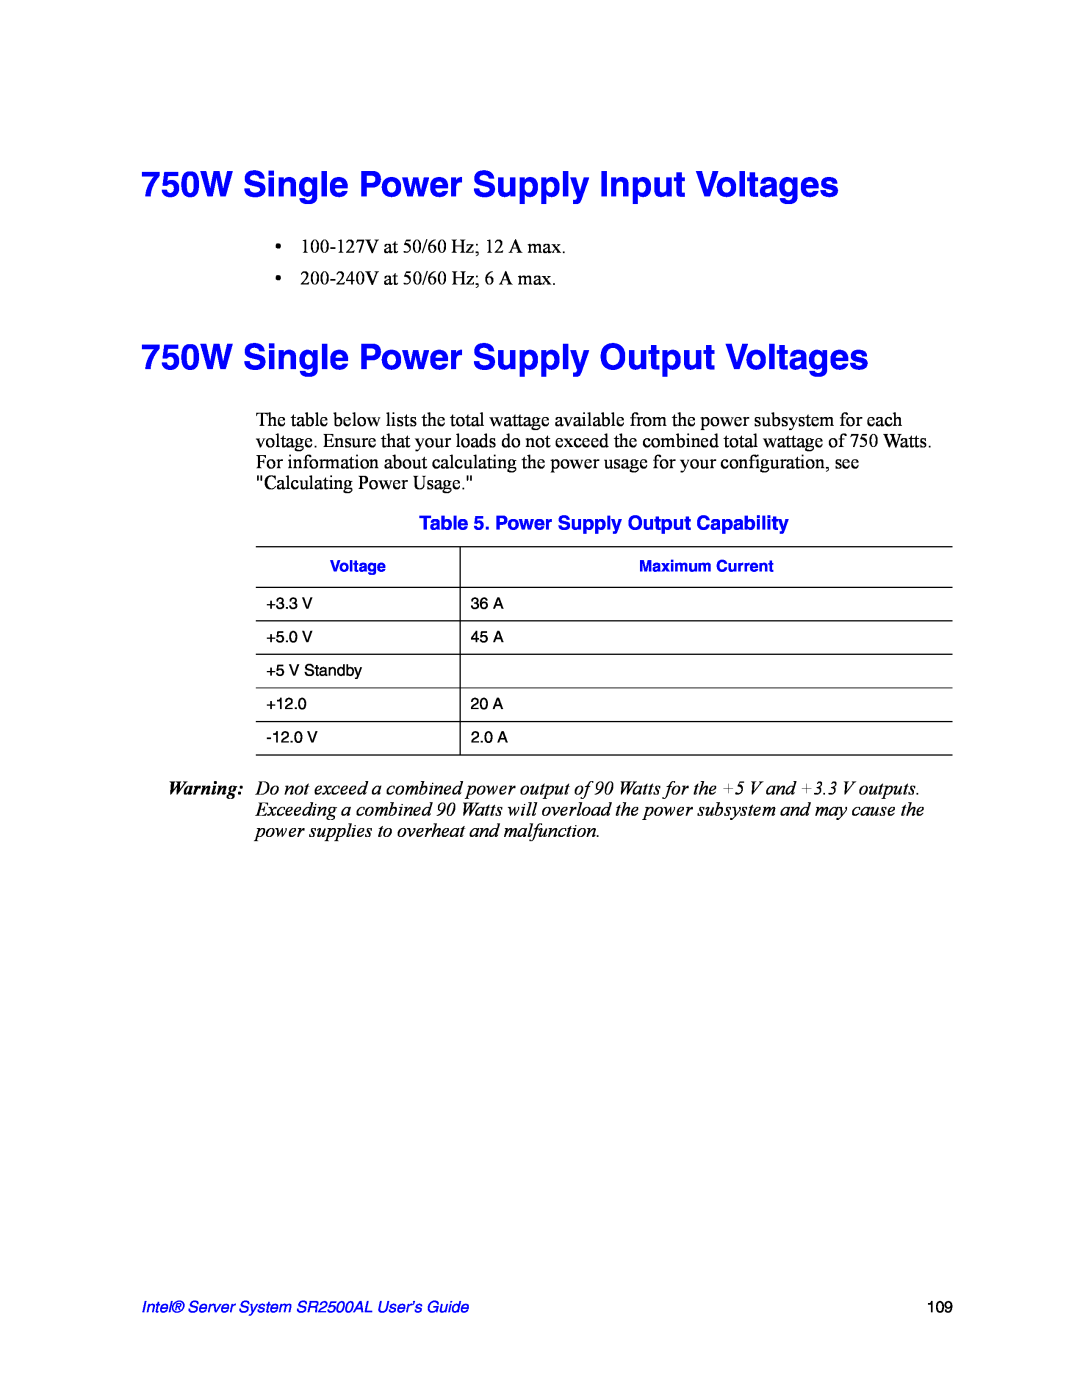 Intel SR2500AL manual 750W Single Power Supply Input Voltages, 750W Single Power Supply Output Voltages 